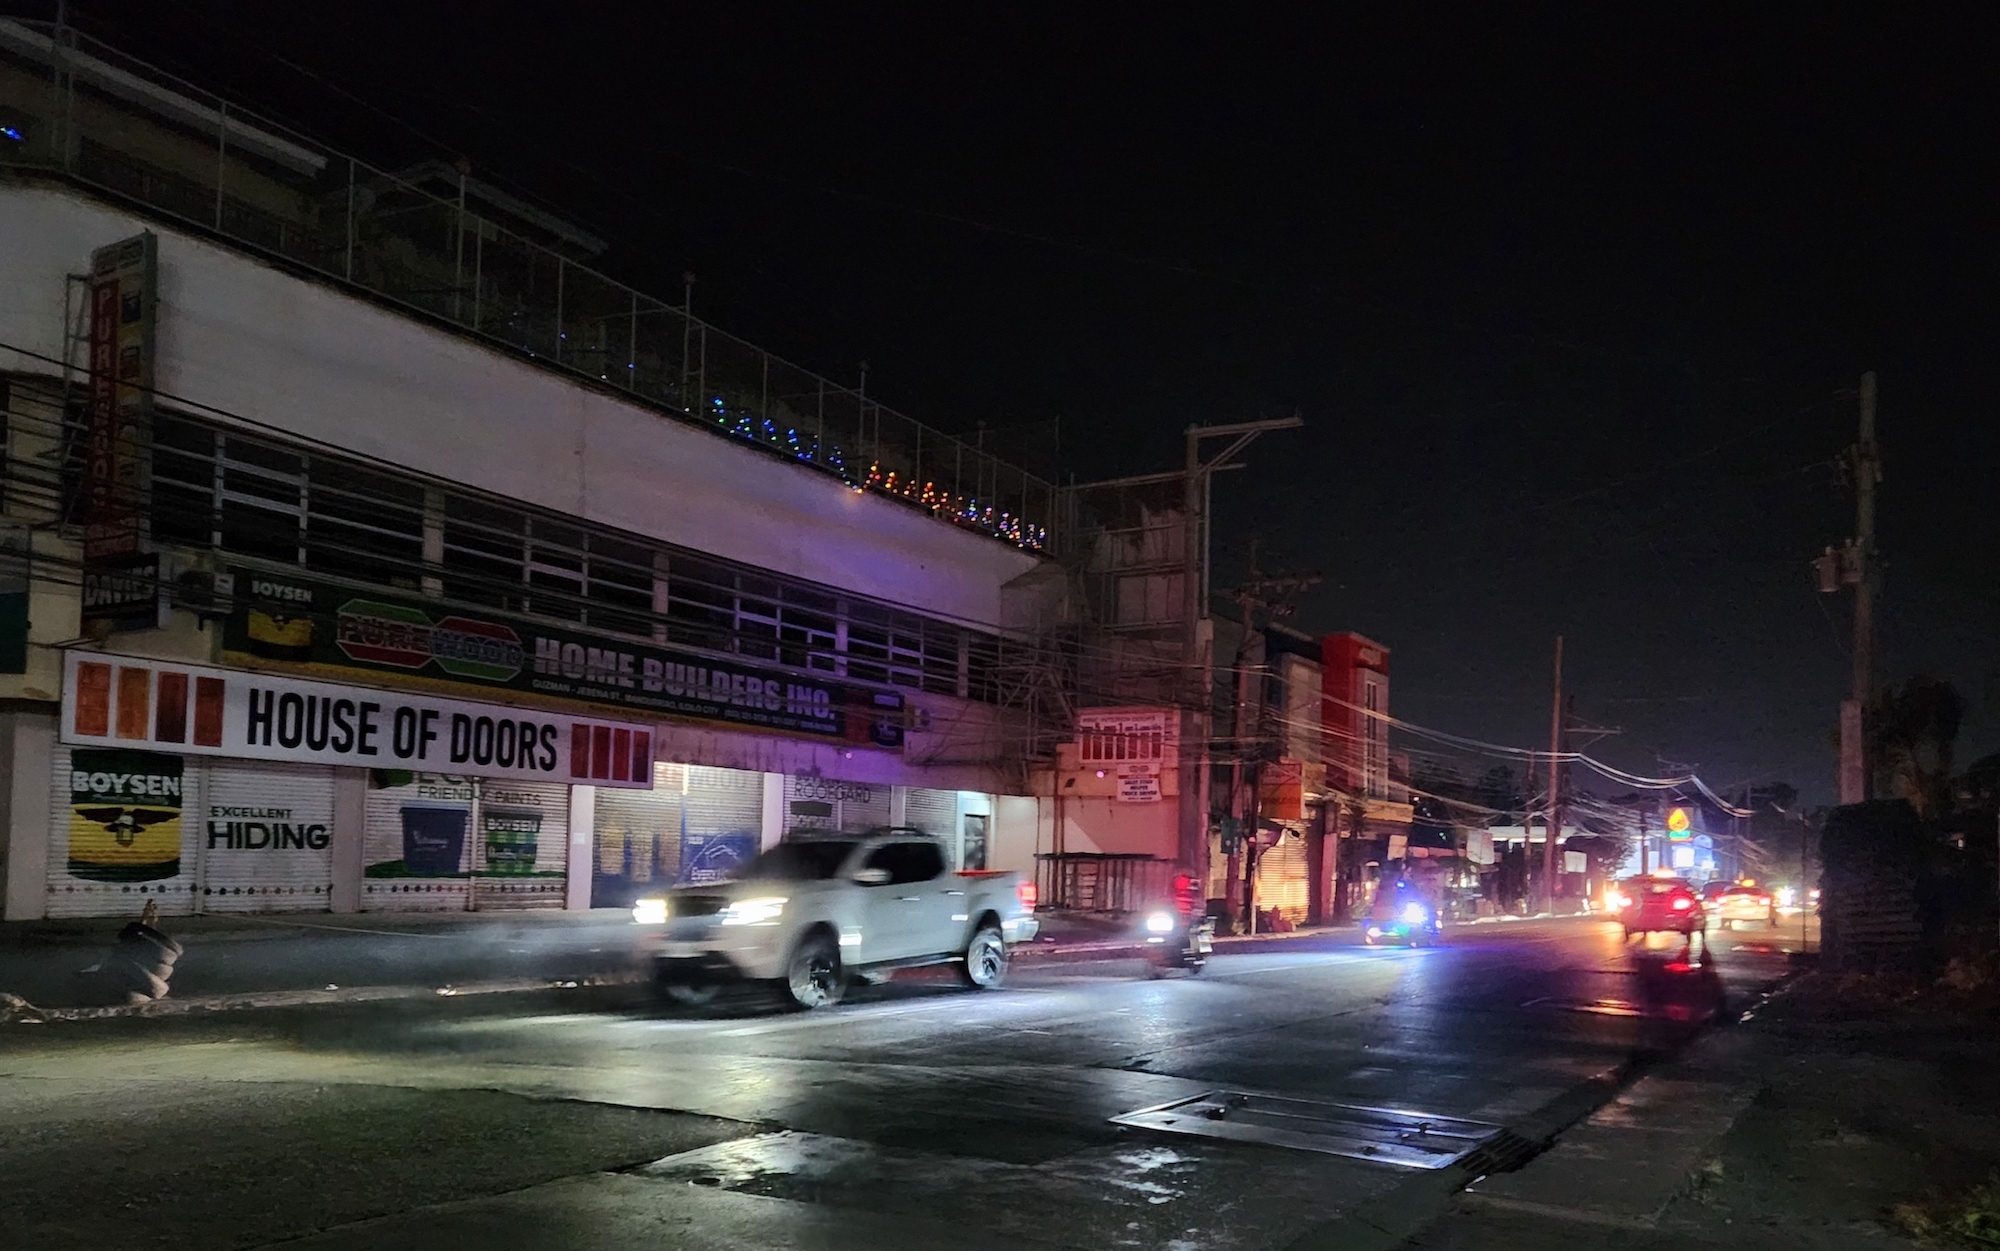 Iloilo lawmaker seeks congressional probe into Visayas power outages